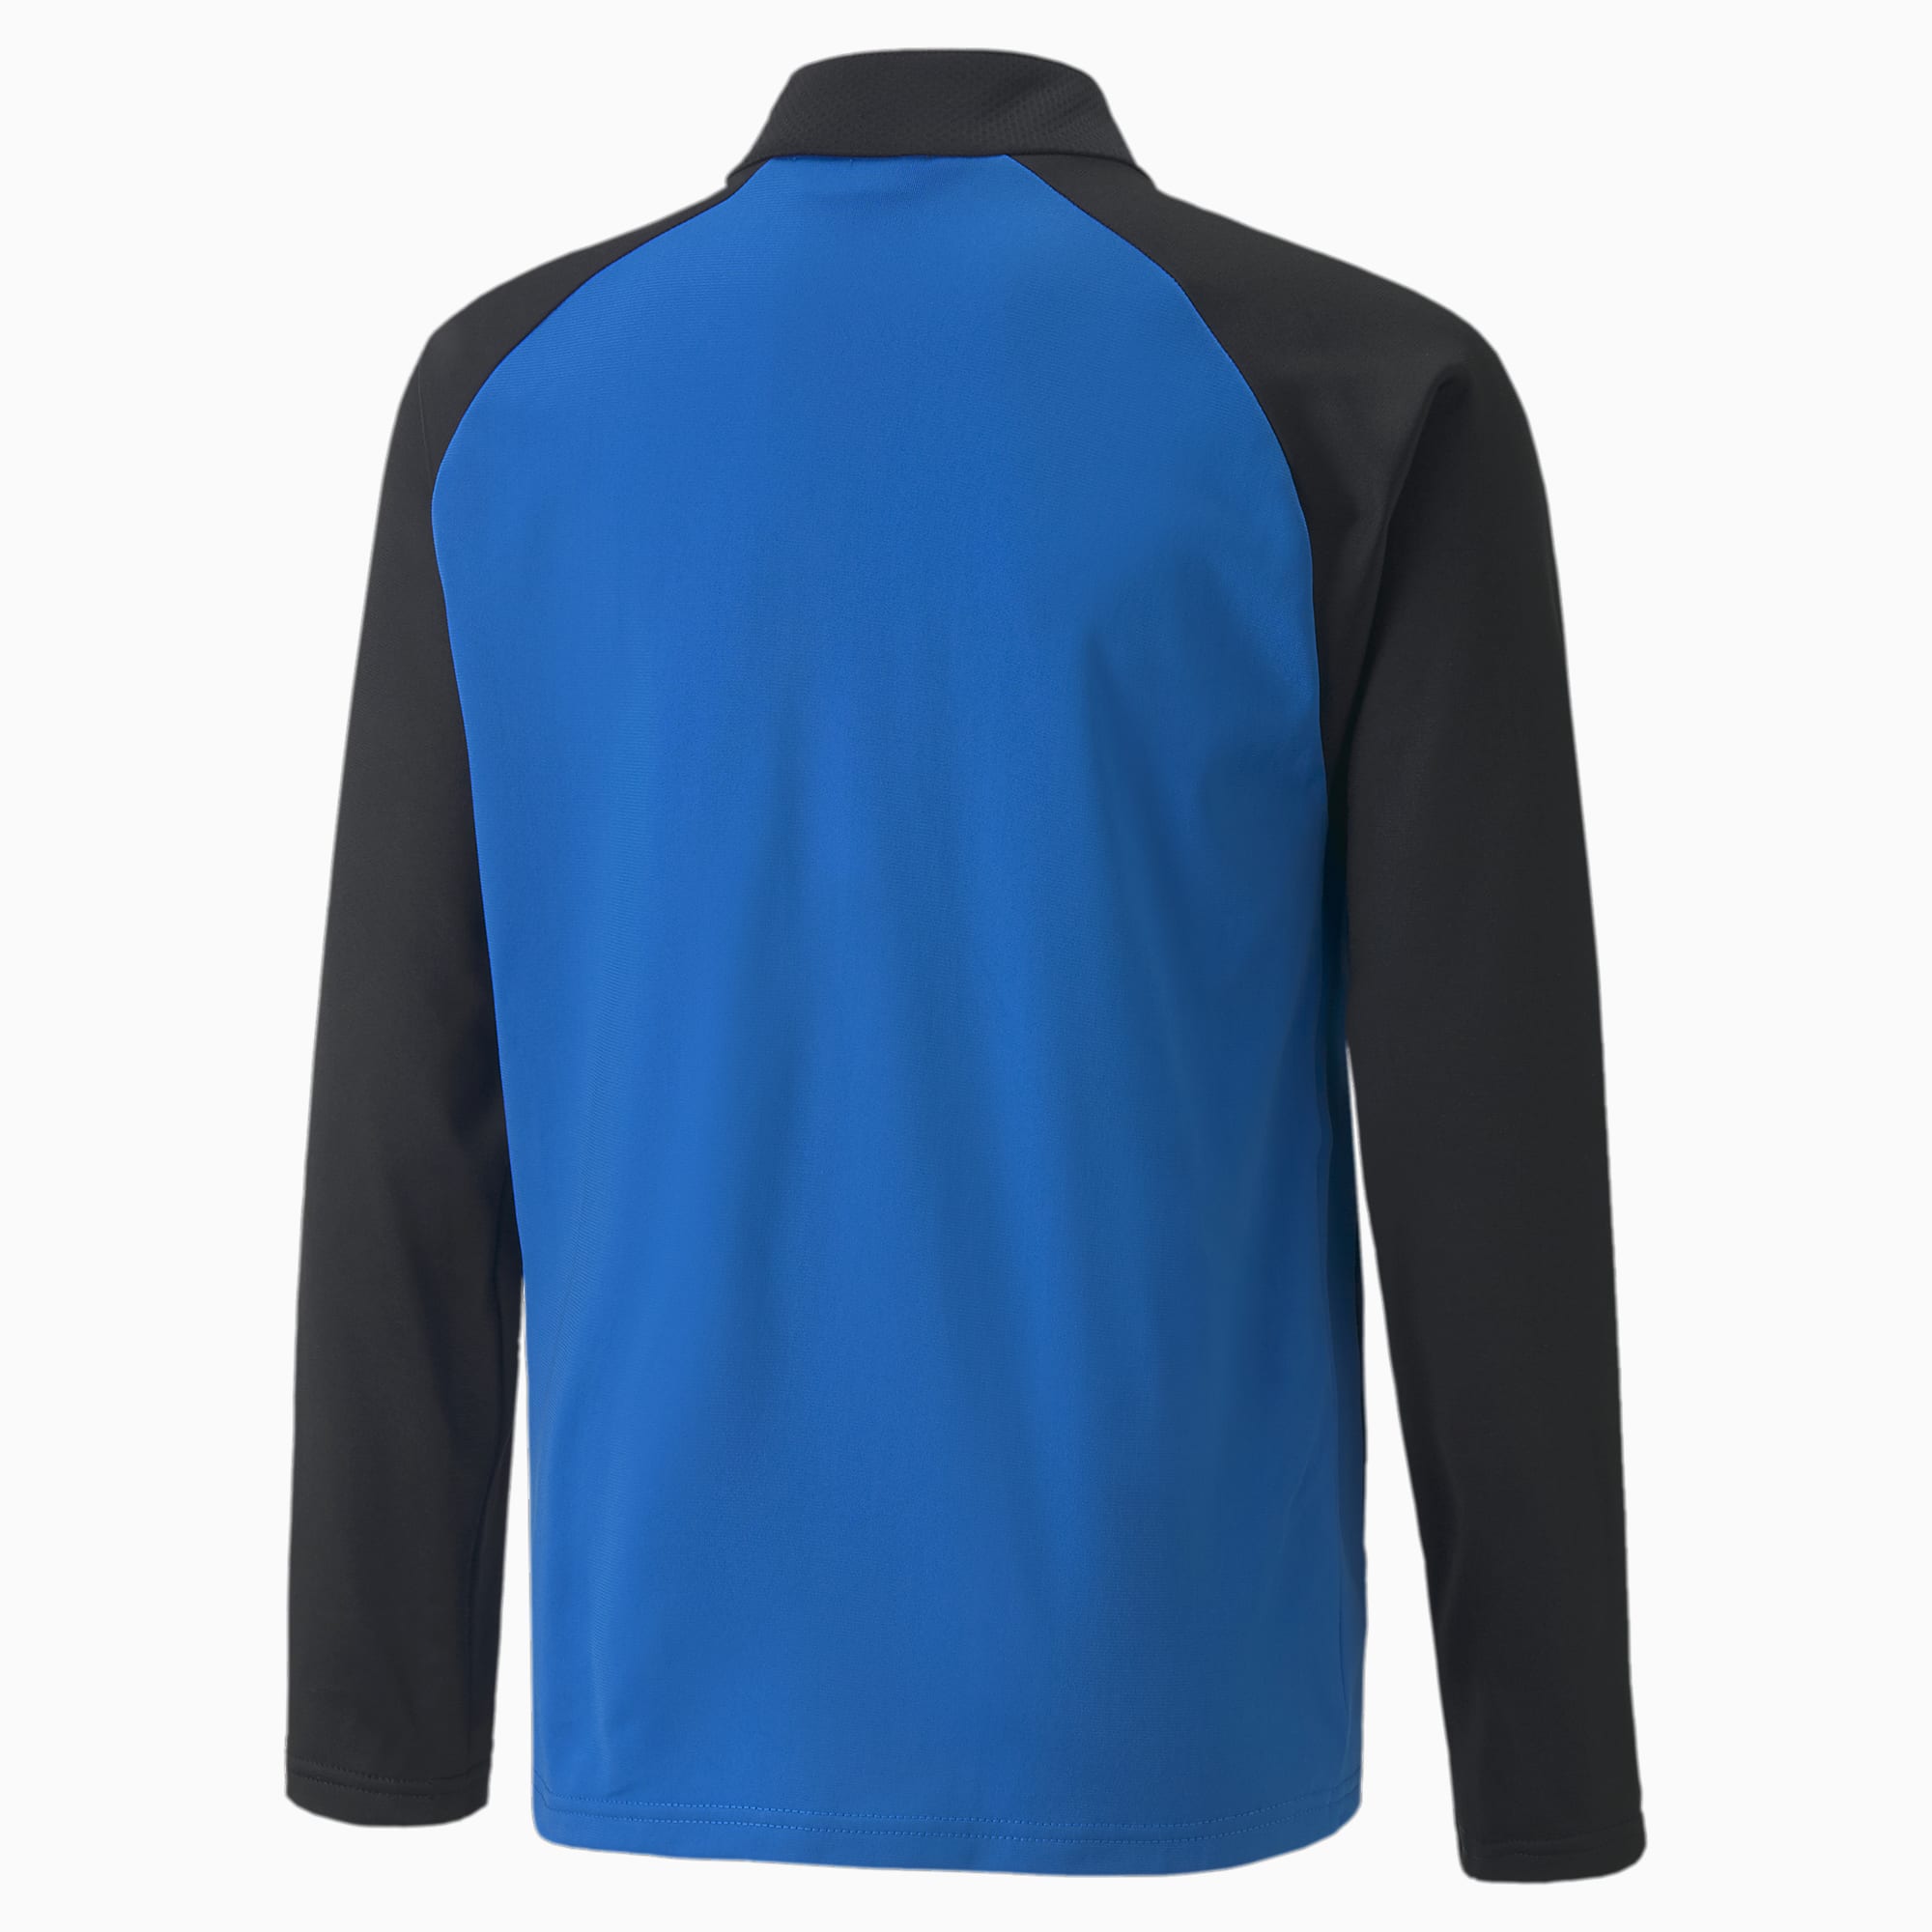 PUMA Teamliga Training Youth Football Jacket, Electric Blue/Black, Size 116, Accessories